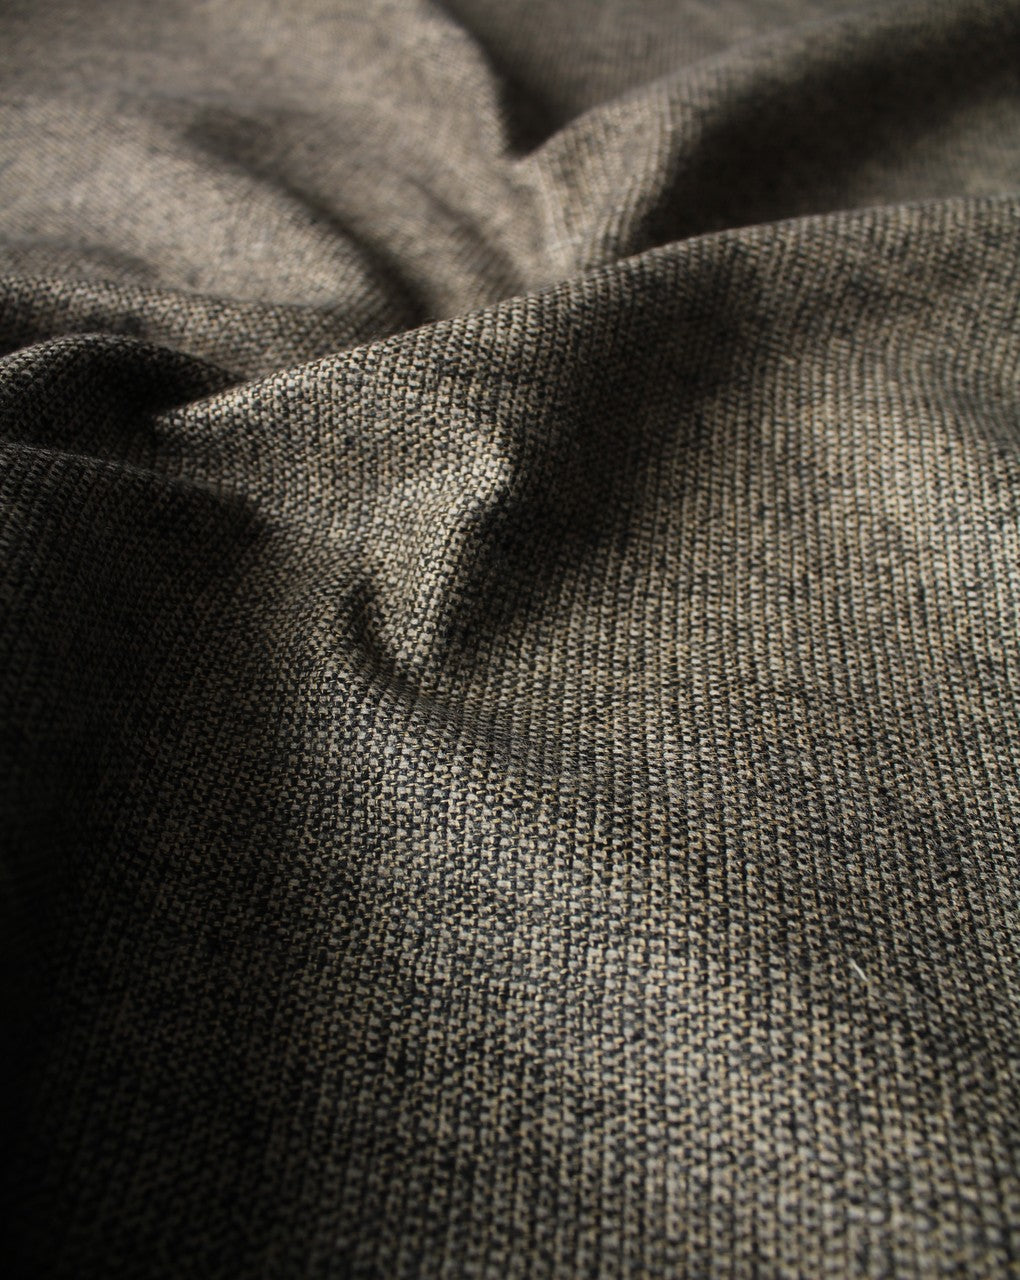 Dark Black and Cream Woolen Tweed Fabric